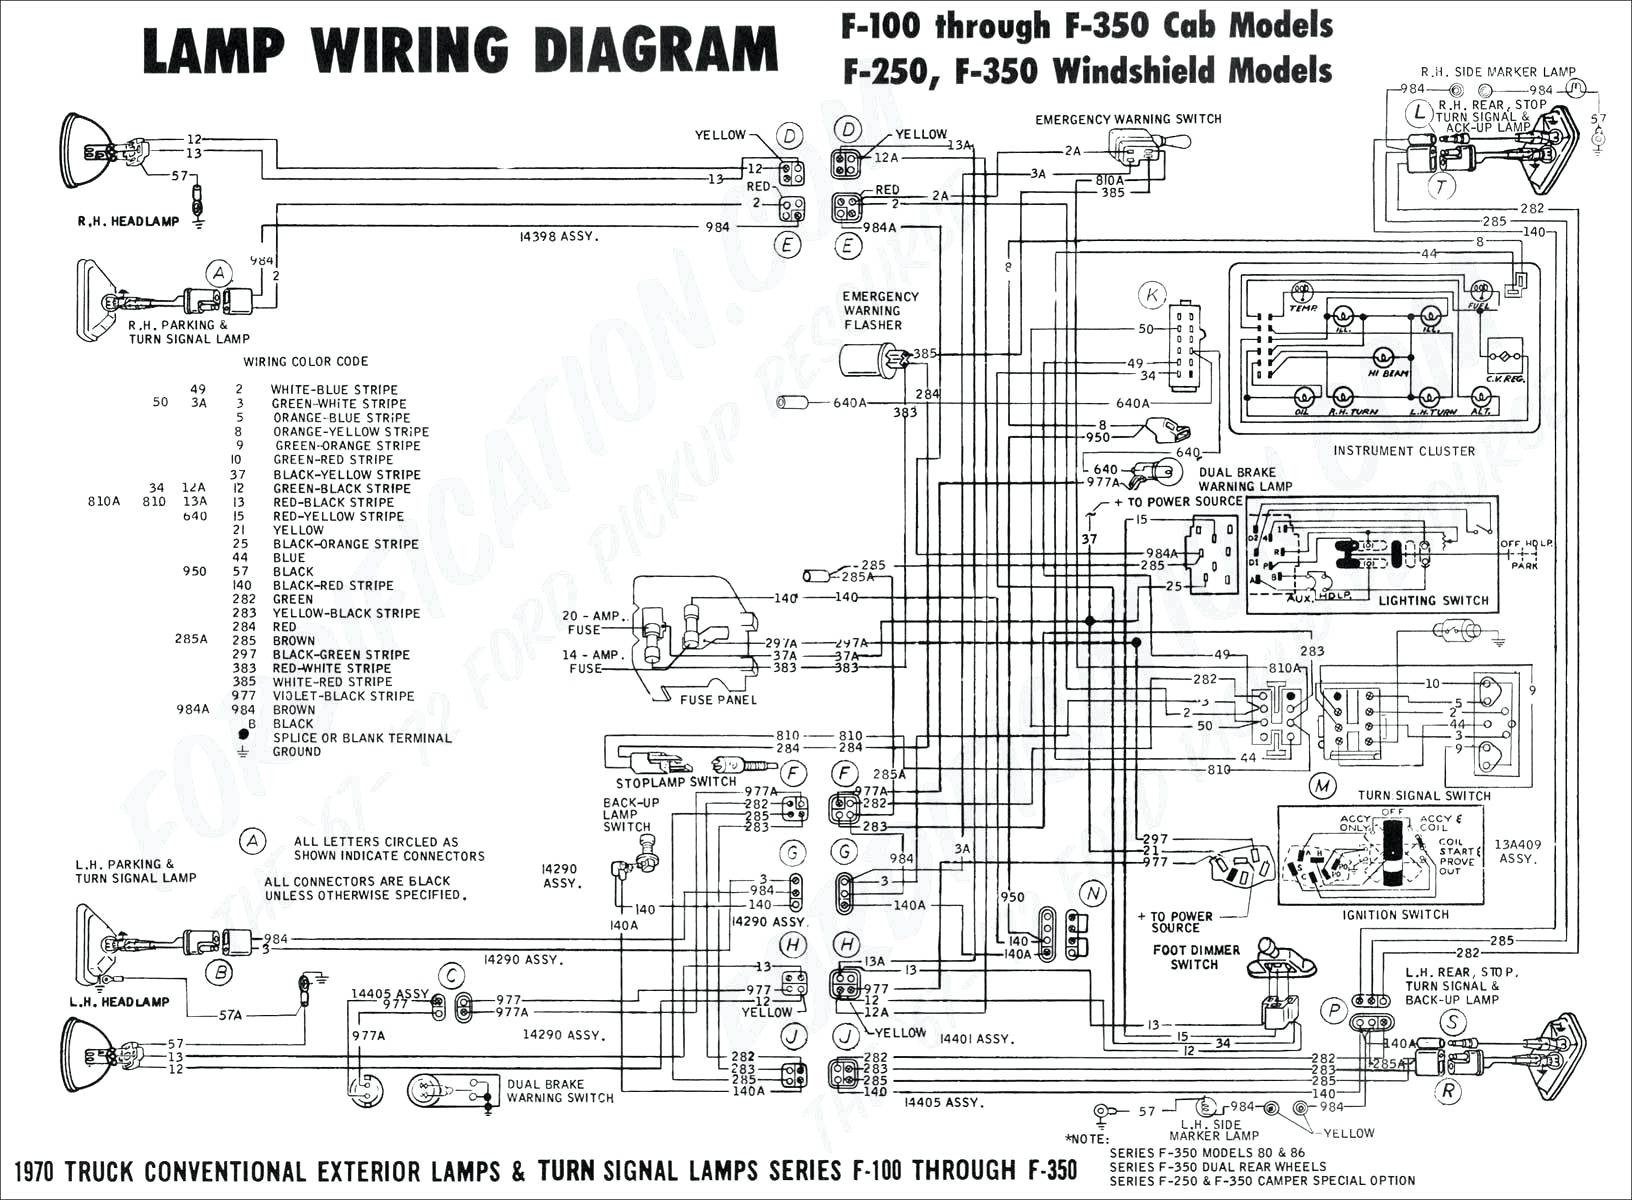 Trailer Wiring Diagram ford Ranger Inspirationa 2000 ford F250 Trailer Wiring Harness Diagram Gallery